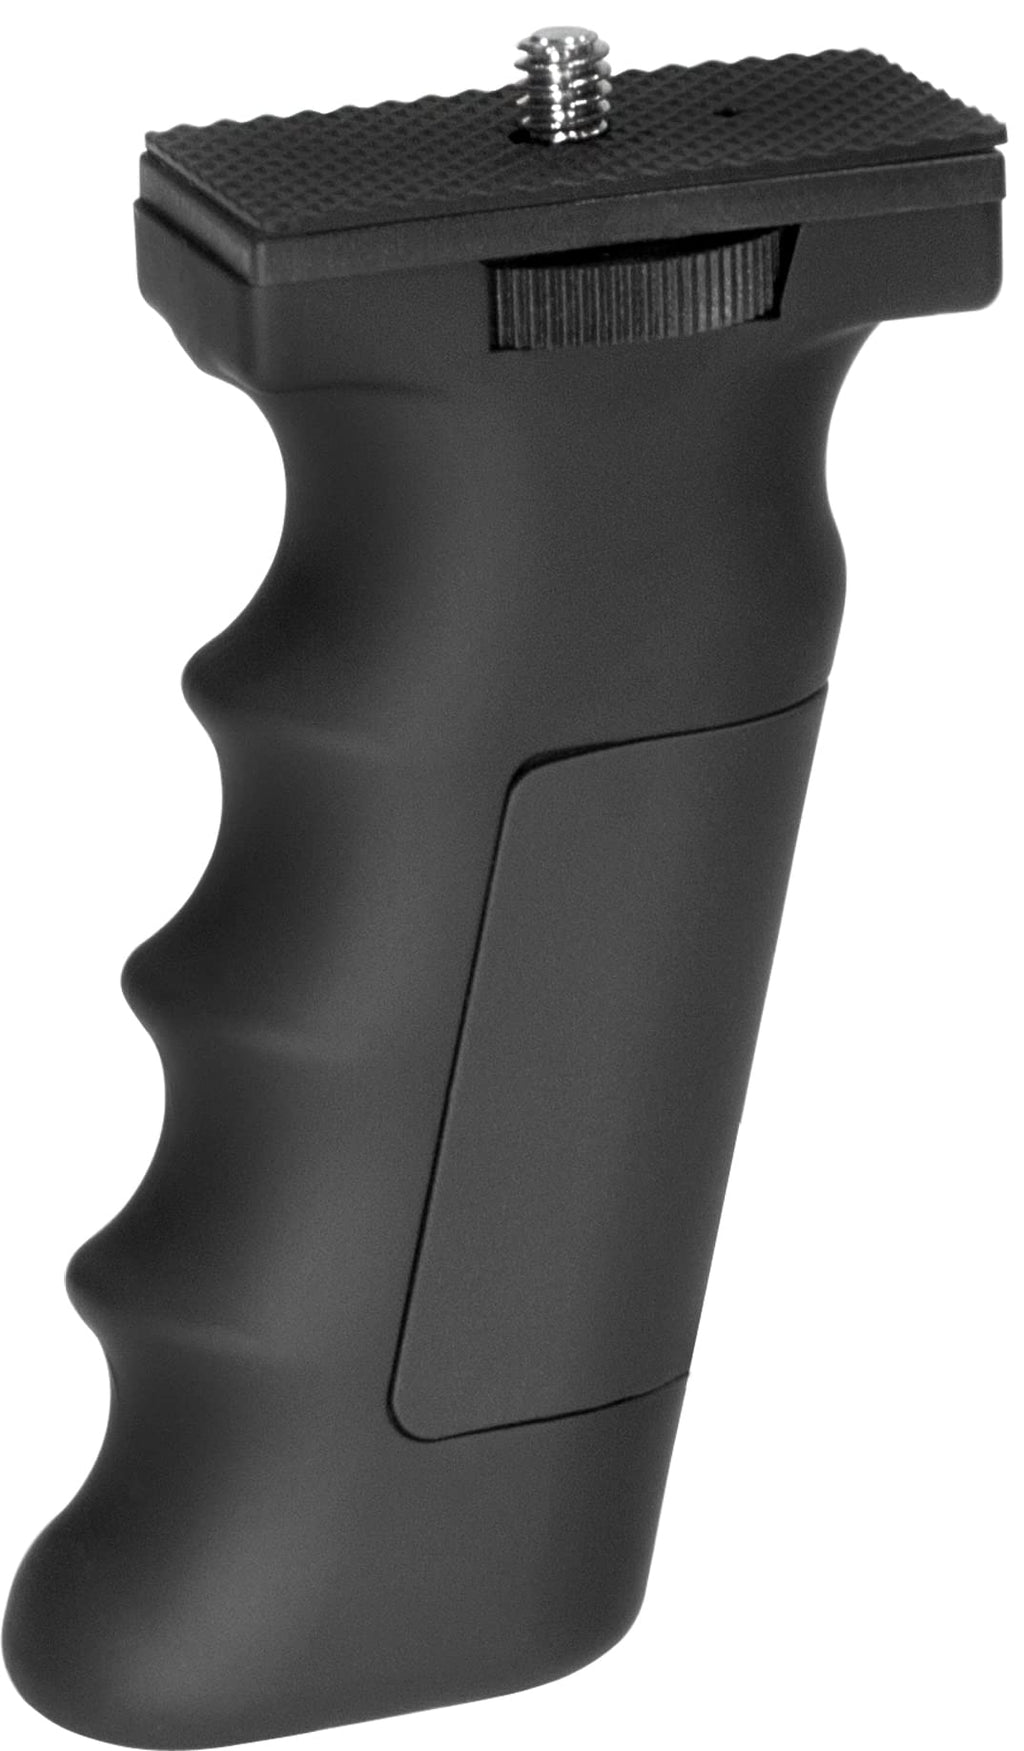 BARSKA Accu Grip Handheld Tripod System, Black